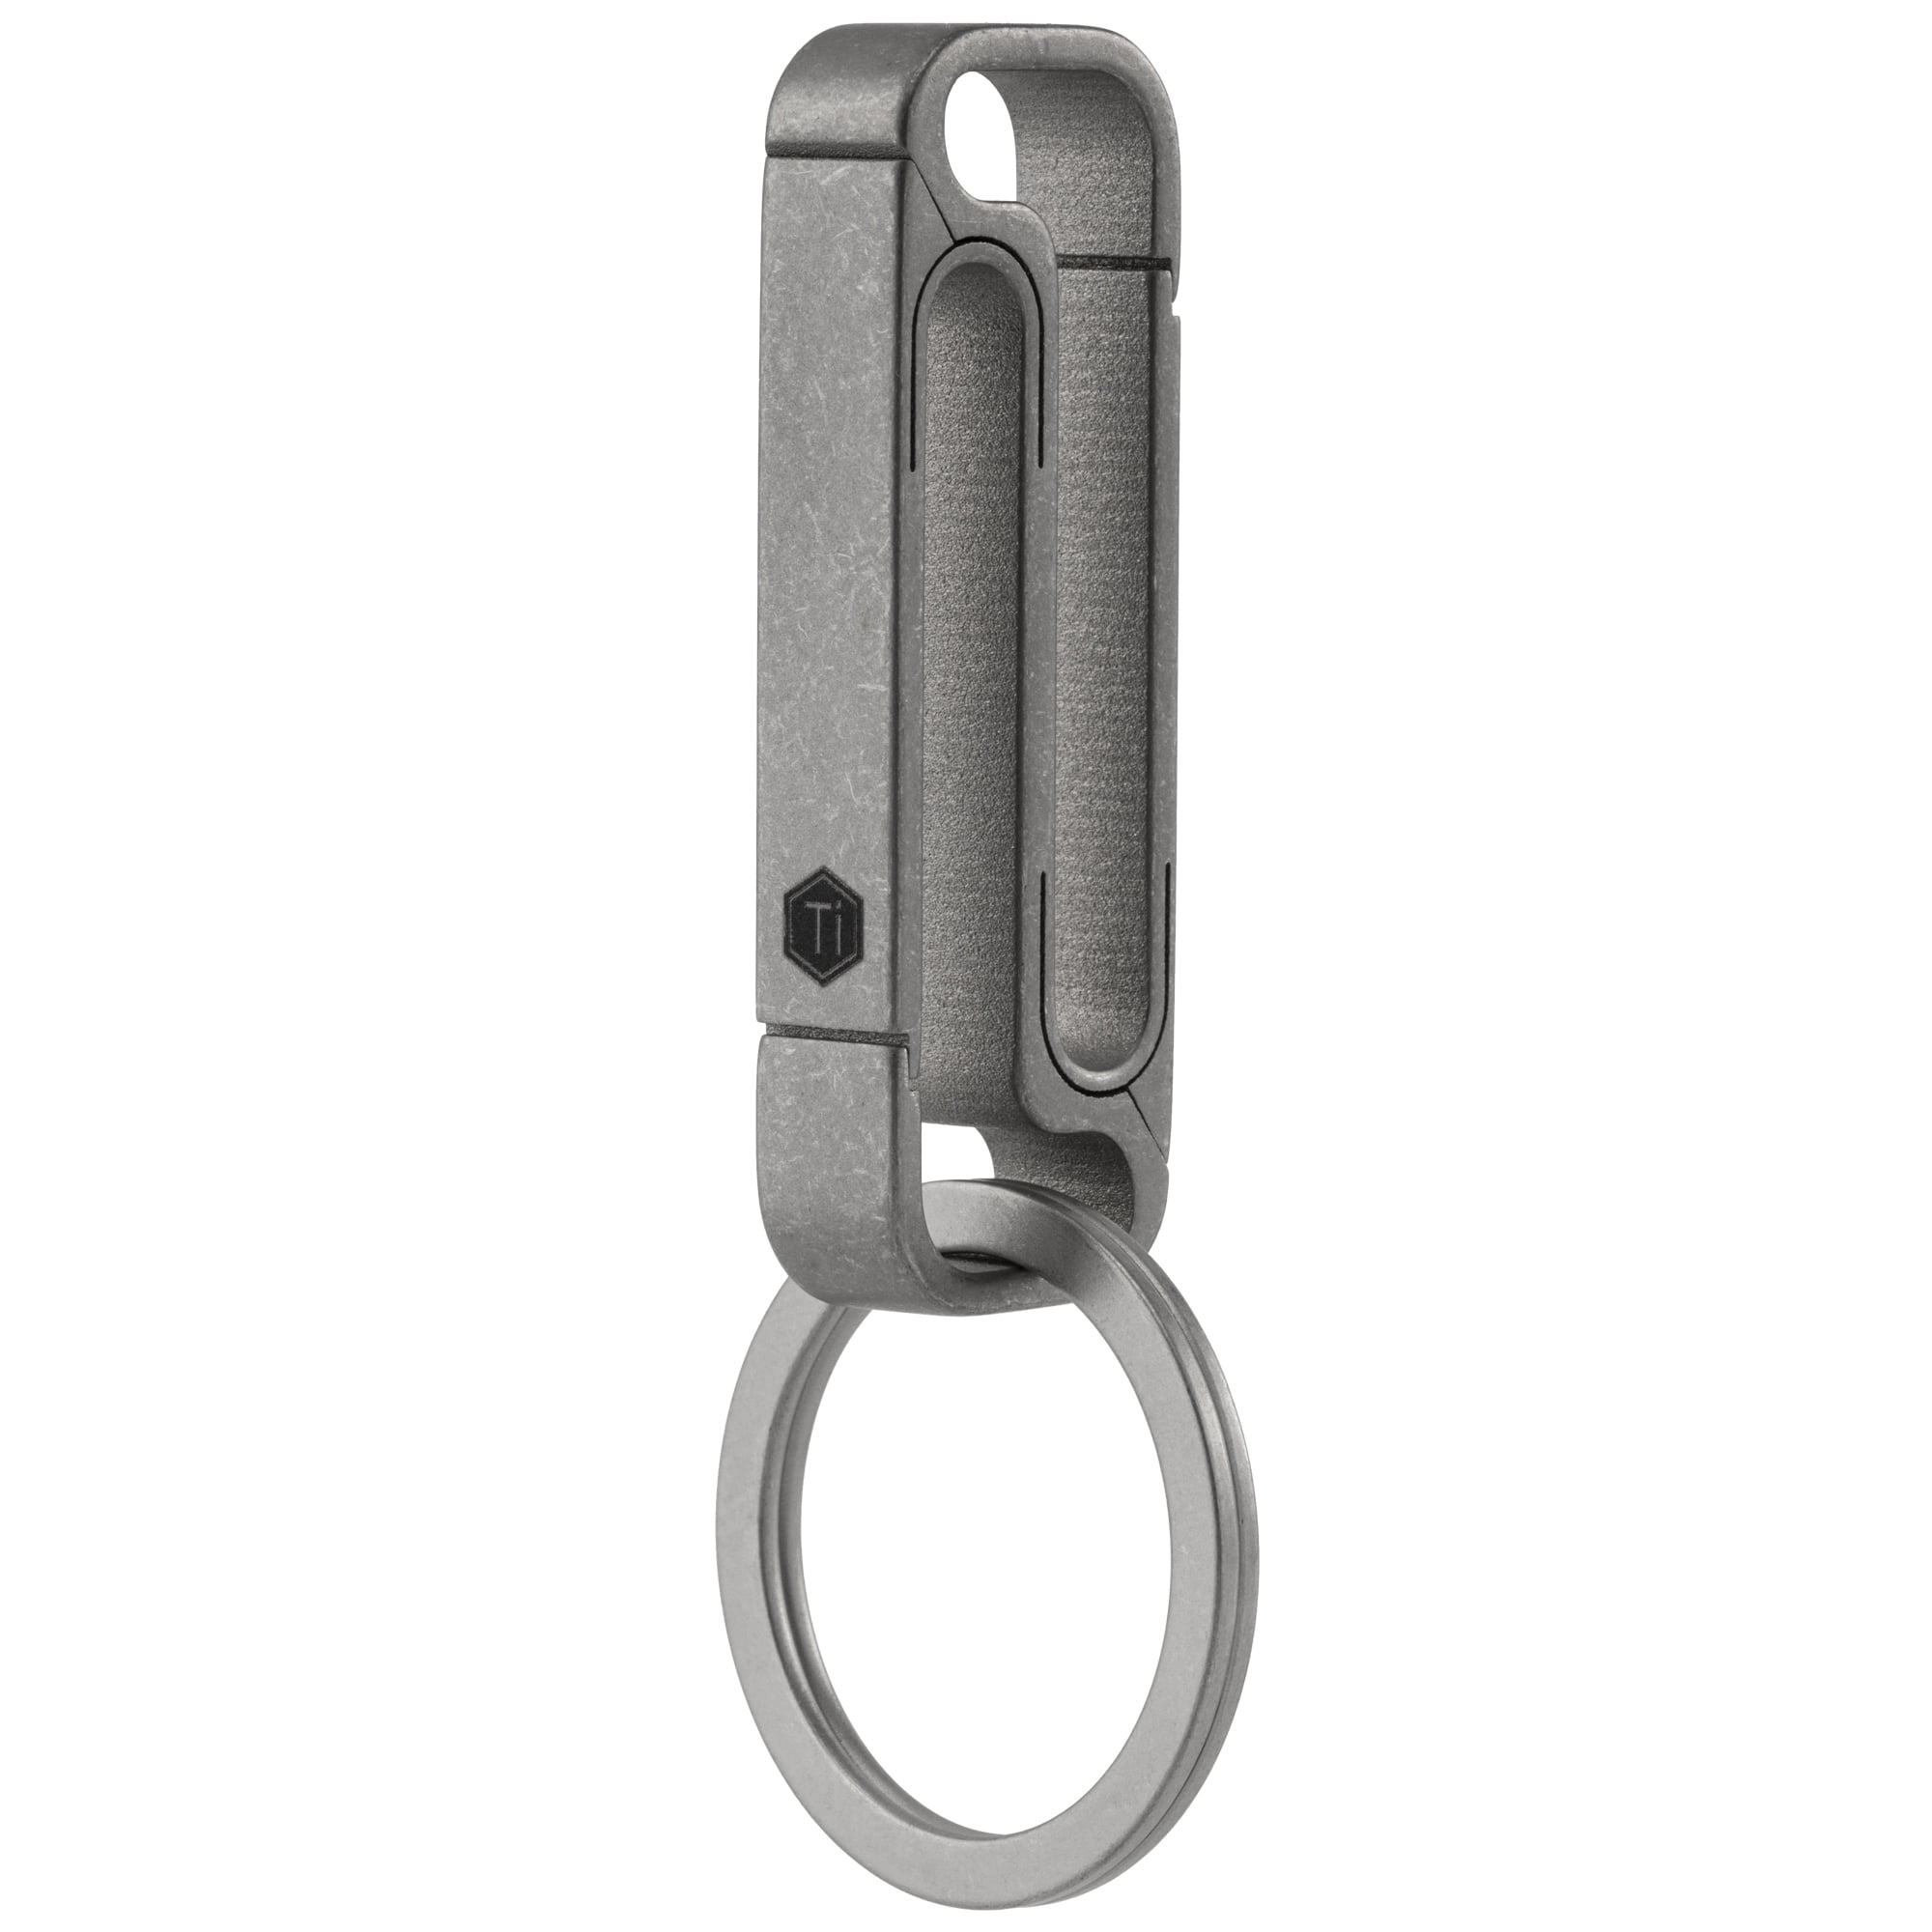 FEGVE Small Titanium Key Clip Keychain Carabiner Belt Clip with Detachable Key Ring and D-Shaped Keyring,Key Fob Holder Key Chain for Men (Dark Grey)